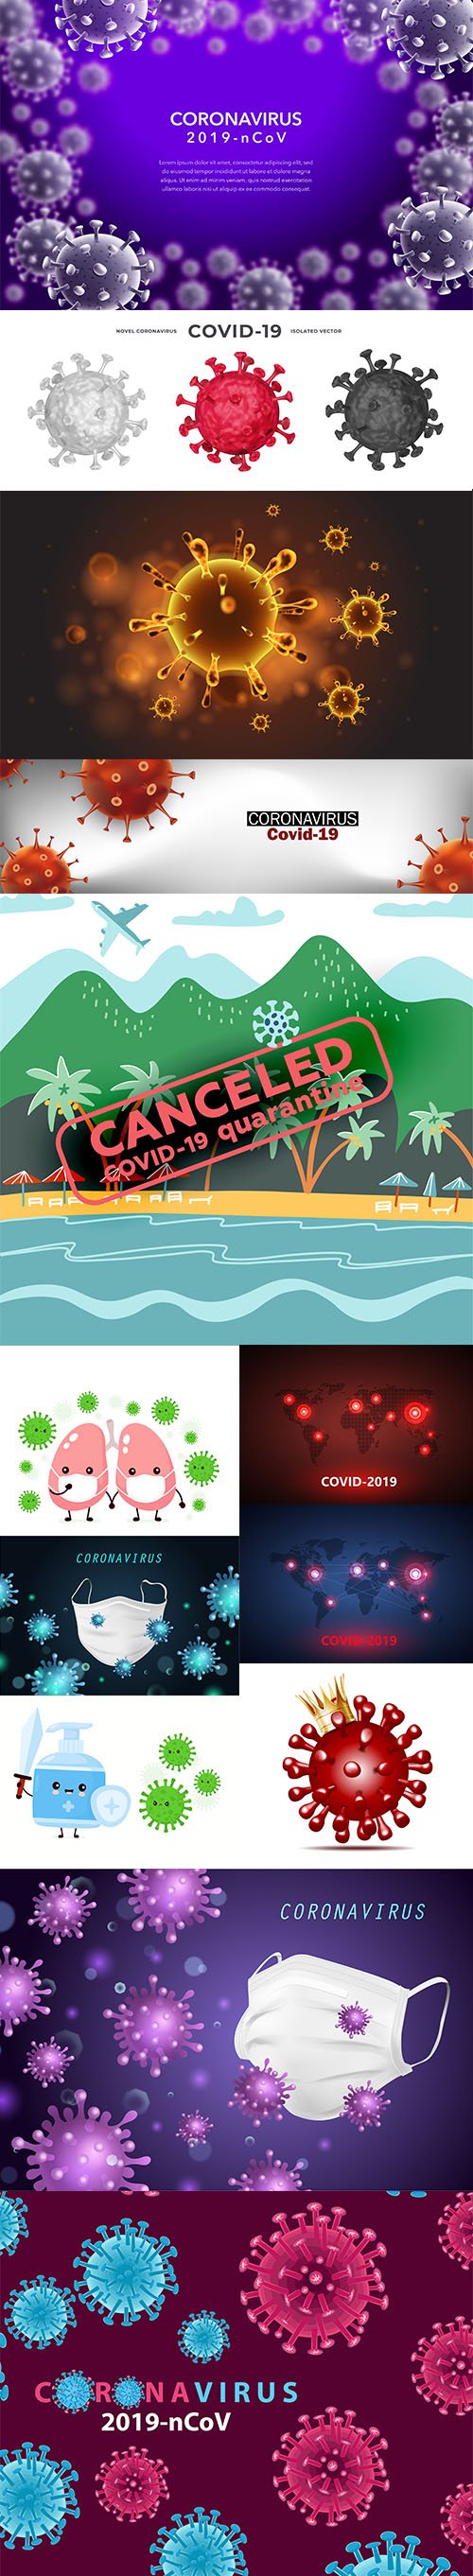 Coronavirus Covid-19 Virus Big Illustration Pack Vol 3